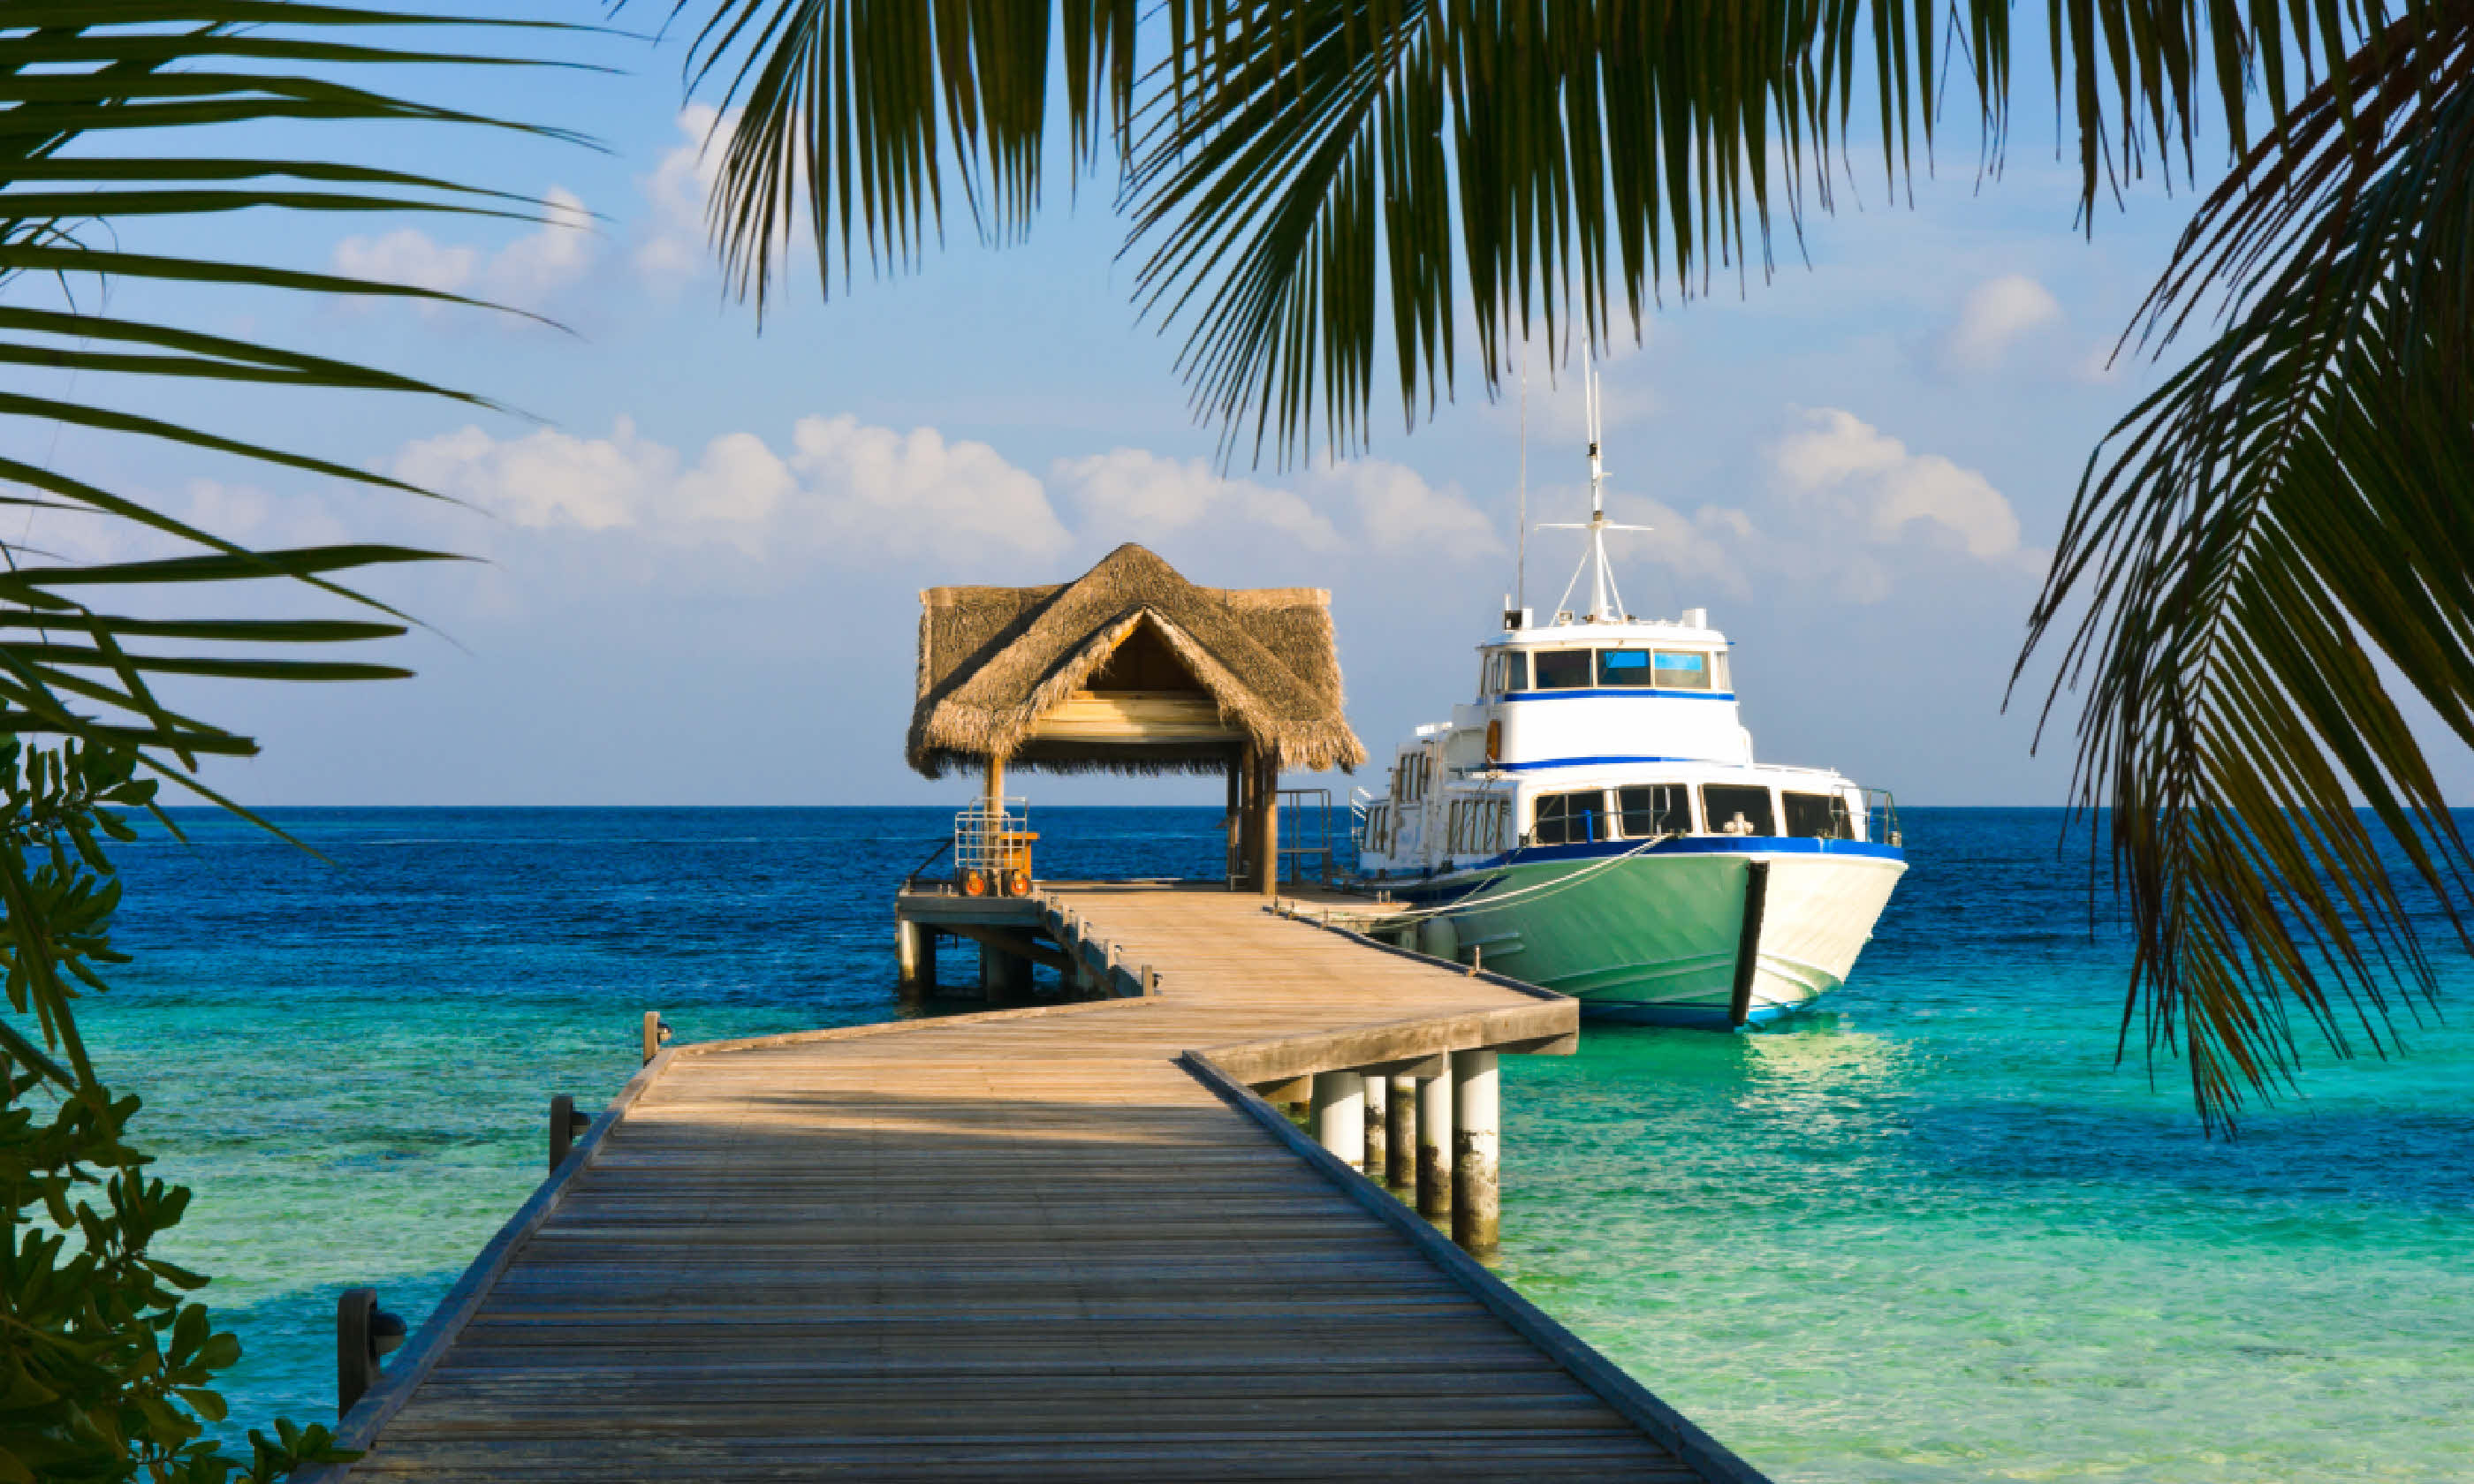 Yacht, Maldives (Shutterstock)